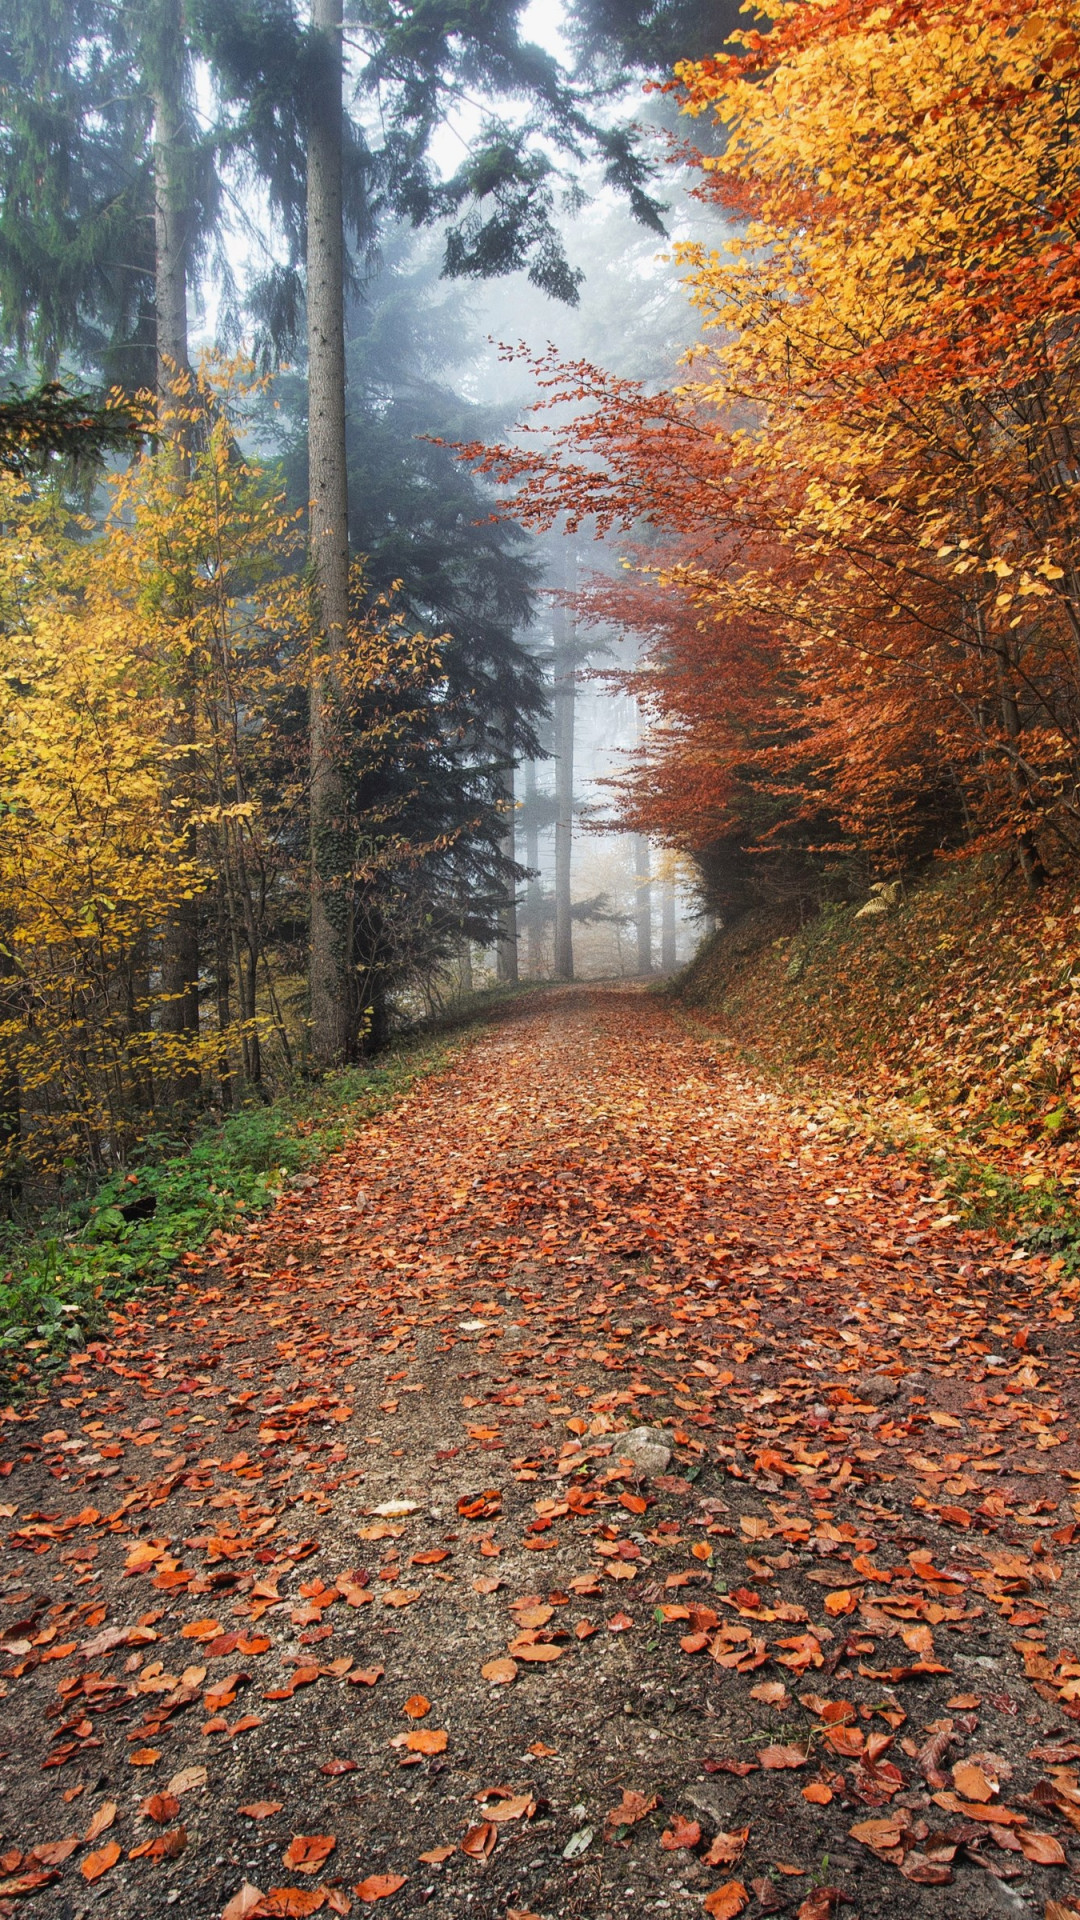 How nature looks Autumn in Kirchzarten, Germany wallpaper 1080x1920